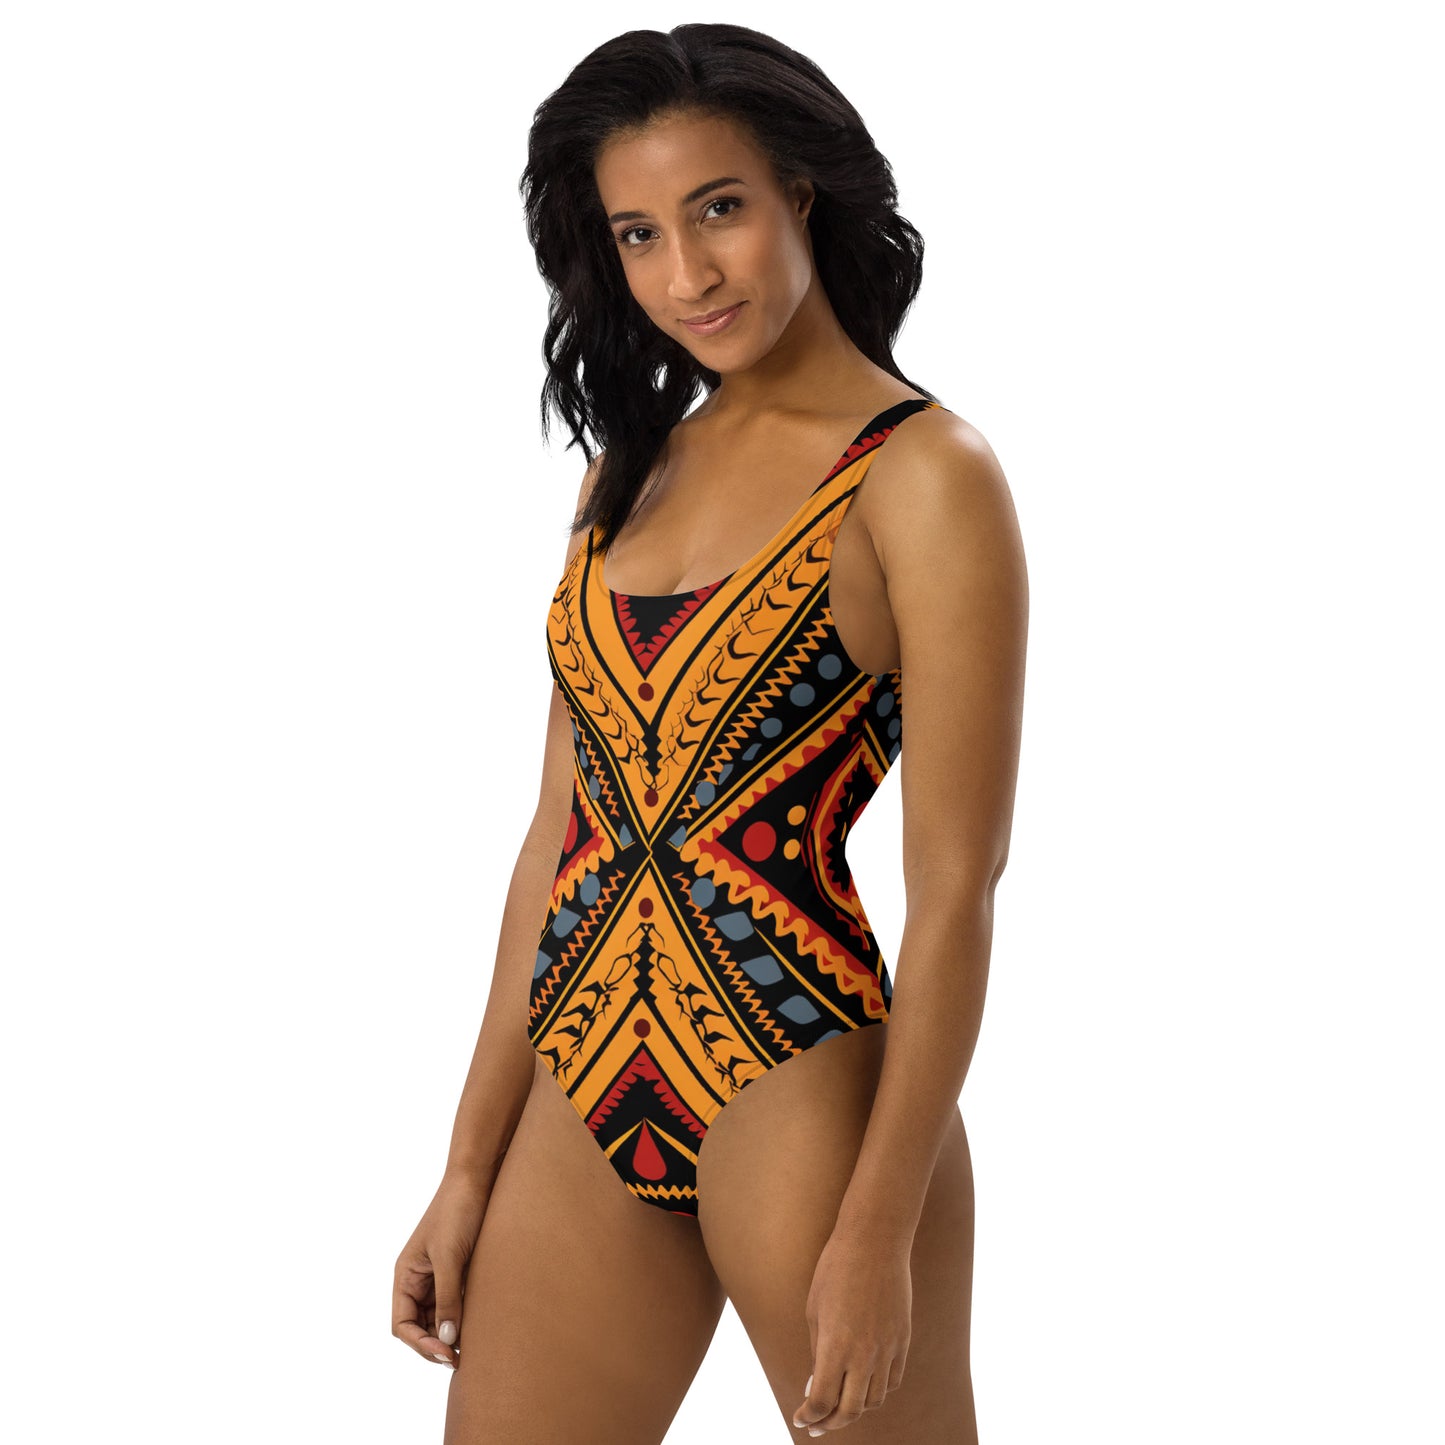 Chefao Cameroon Toghu I, One-Piece Swimsuit